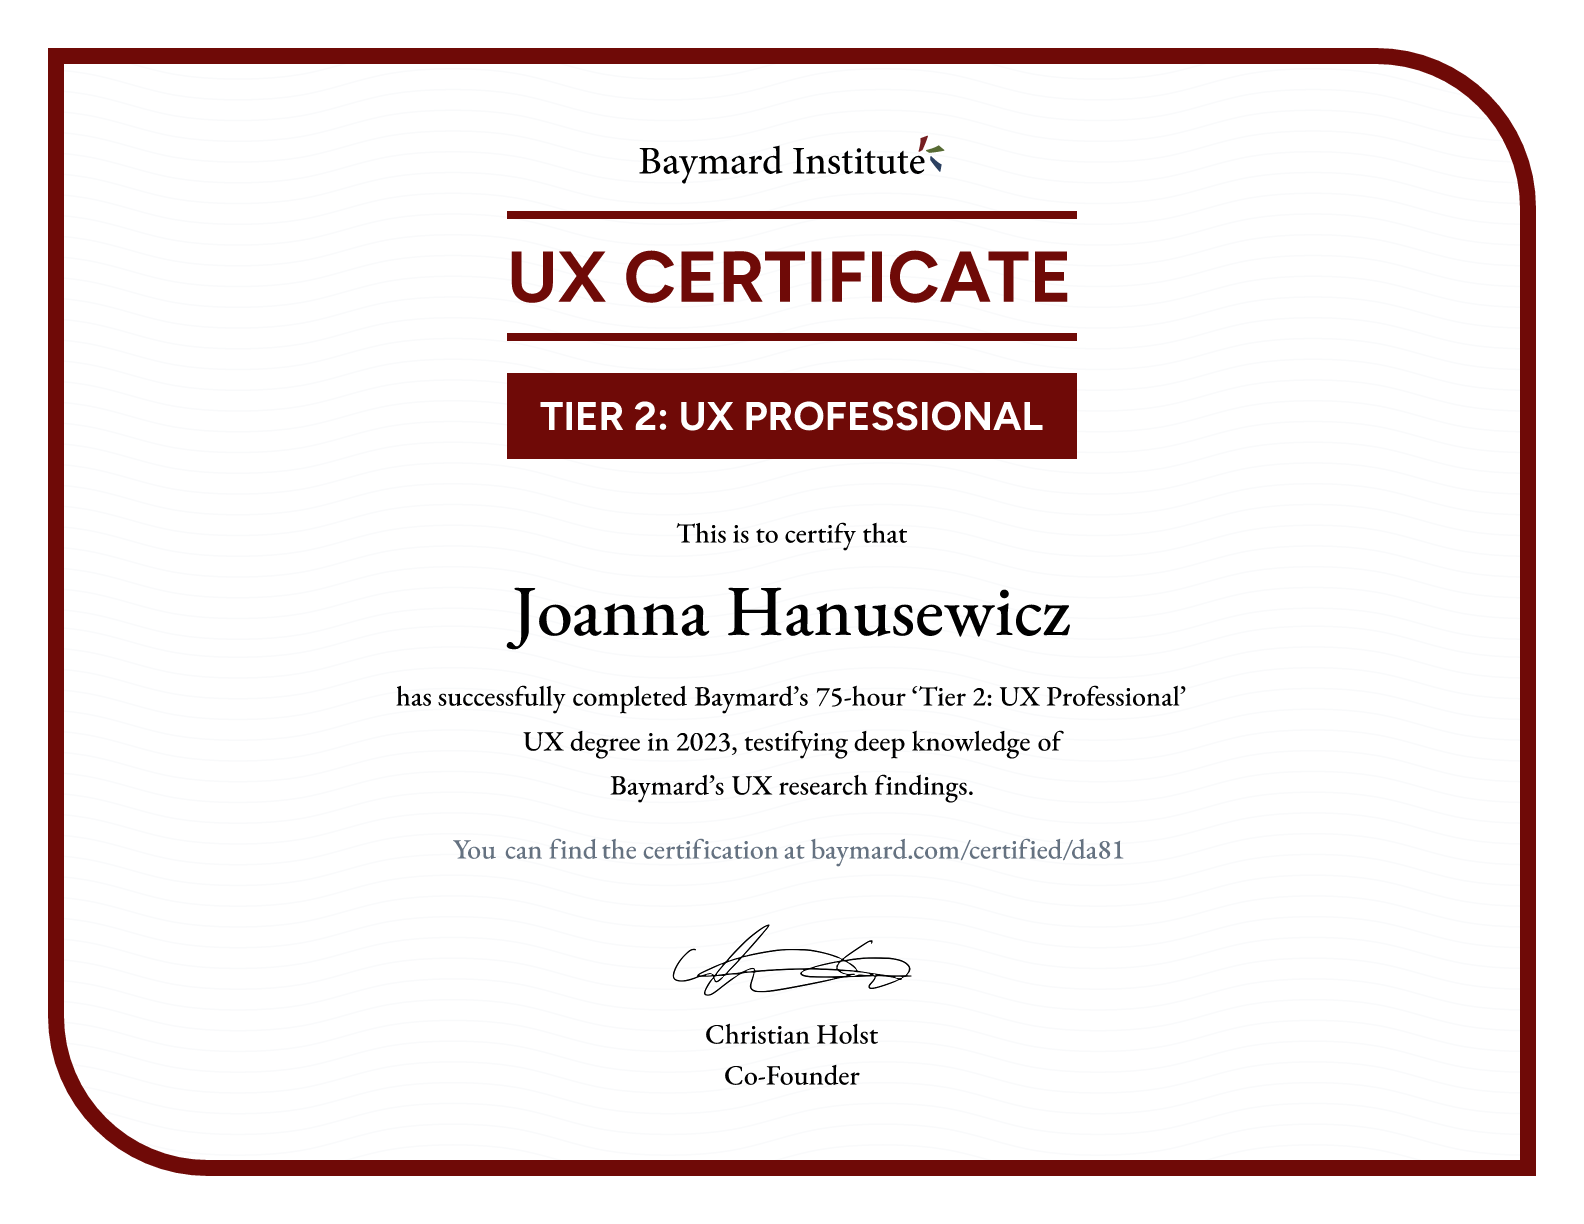 Joanna Hanusewicz’s certificate